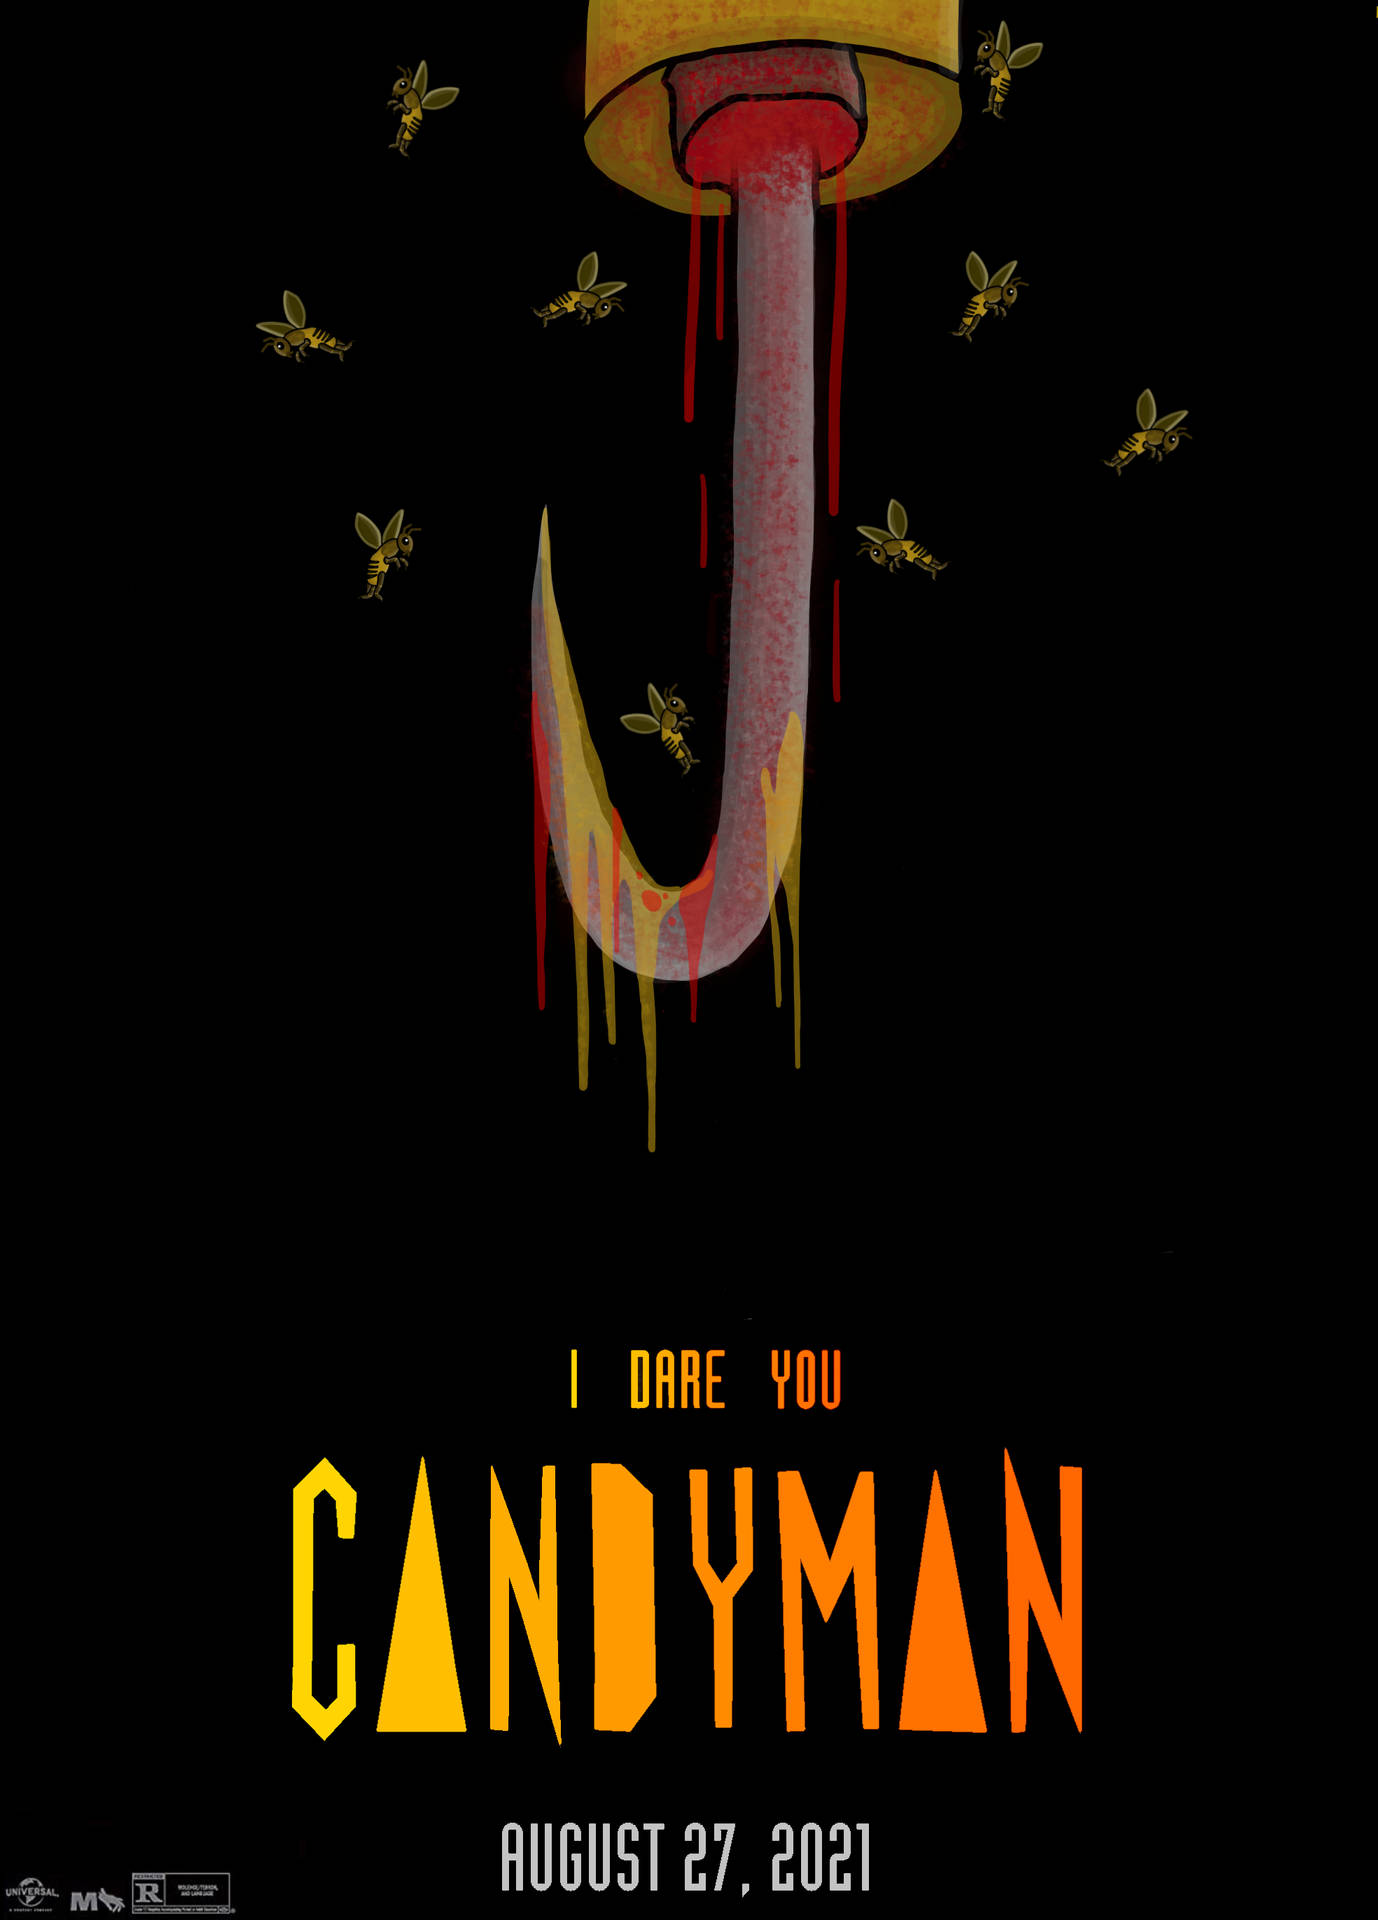 Candyman 2021 Film Poster Wallpaper